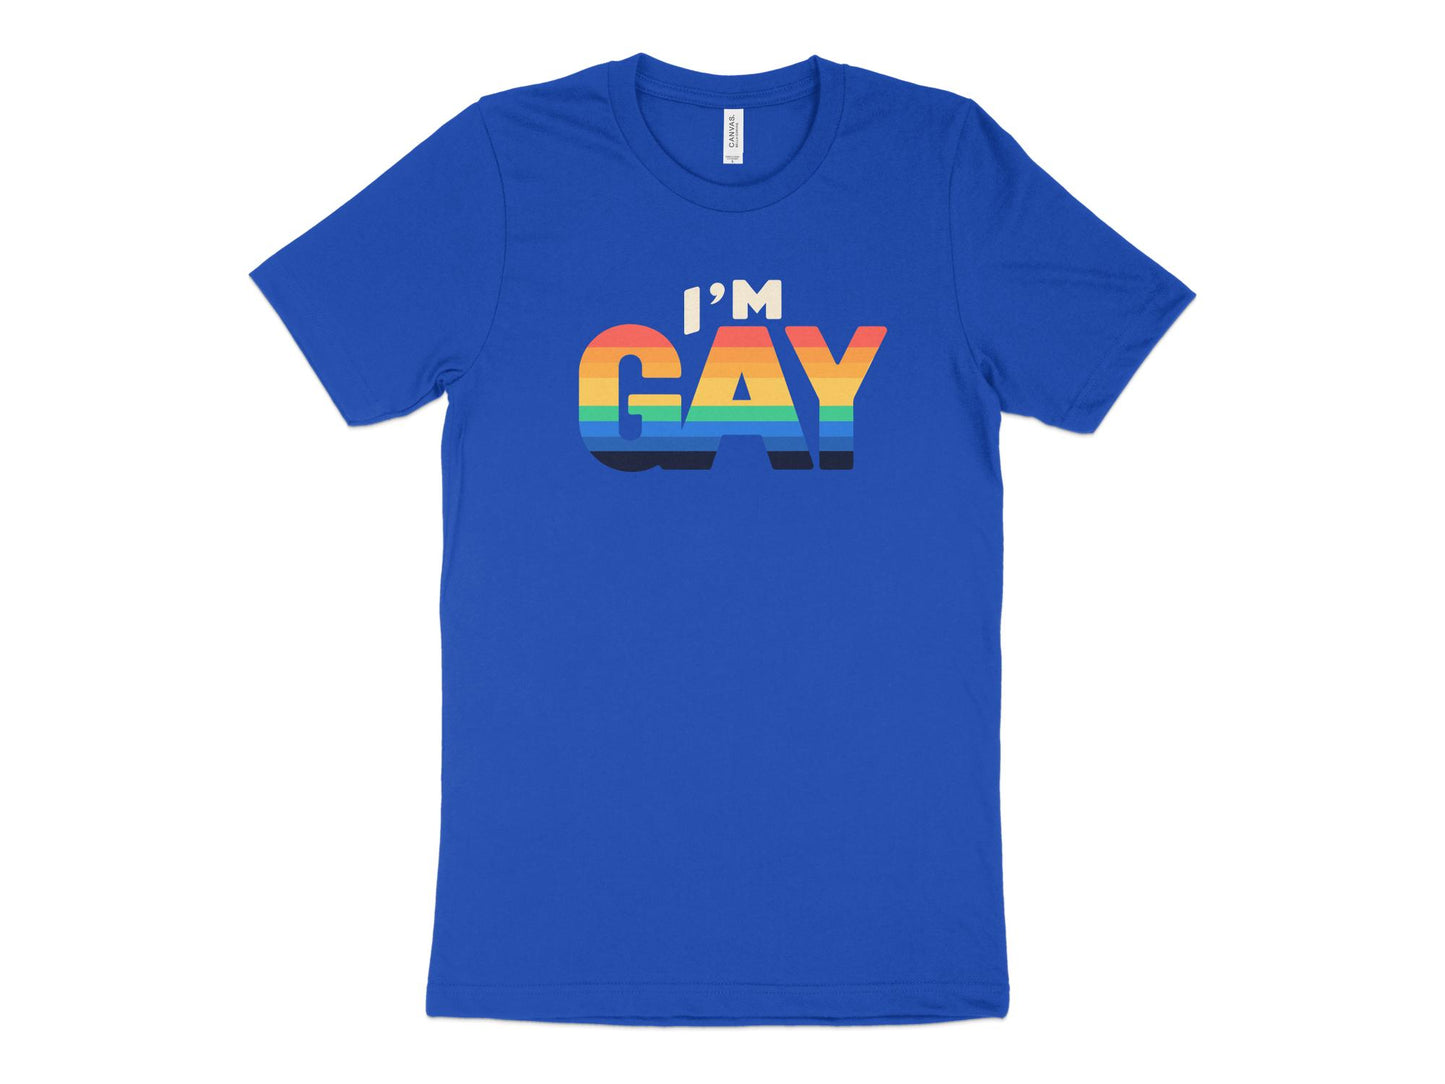 I'm Gay Shirt, royal blue